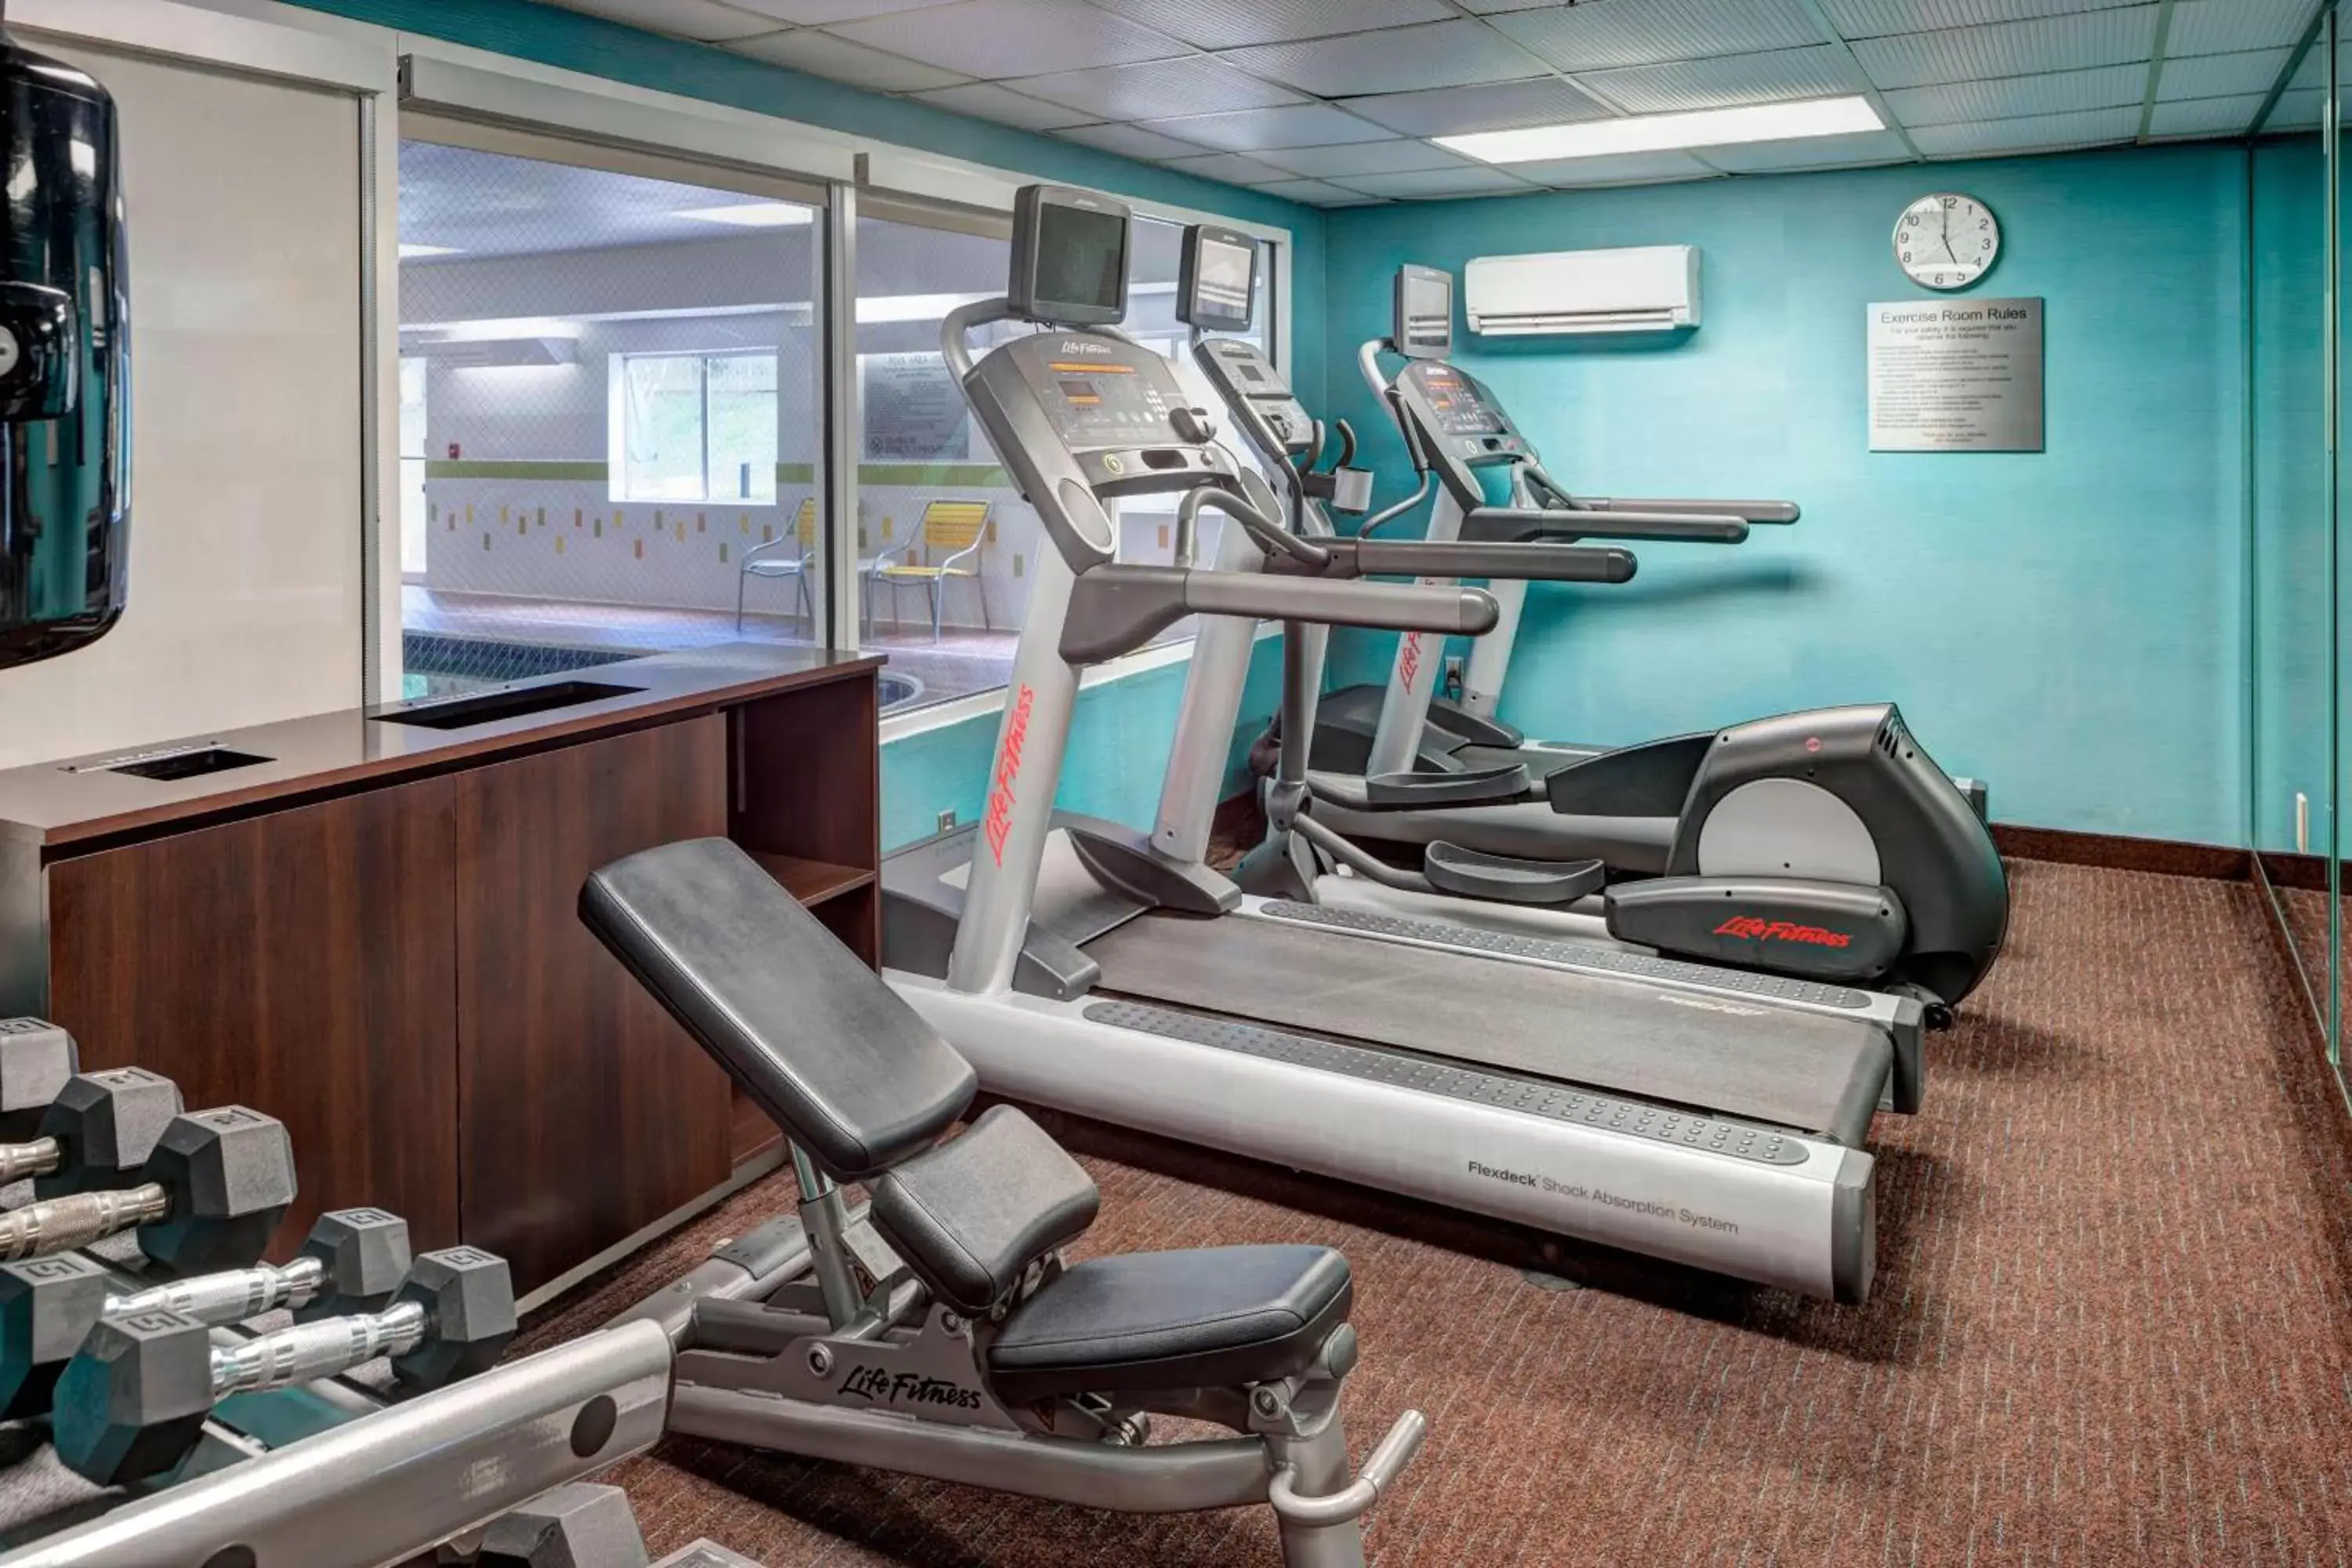 Fitness centre/facilities, Fitness Center/Facilities in Fairfield Inn Tuscaloosa